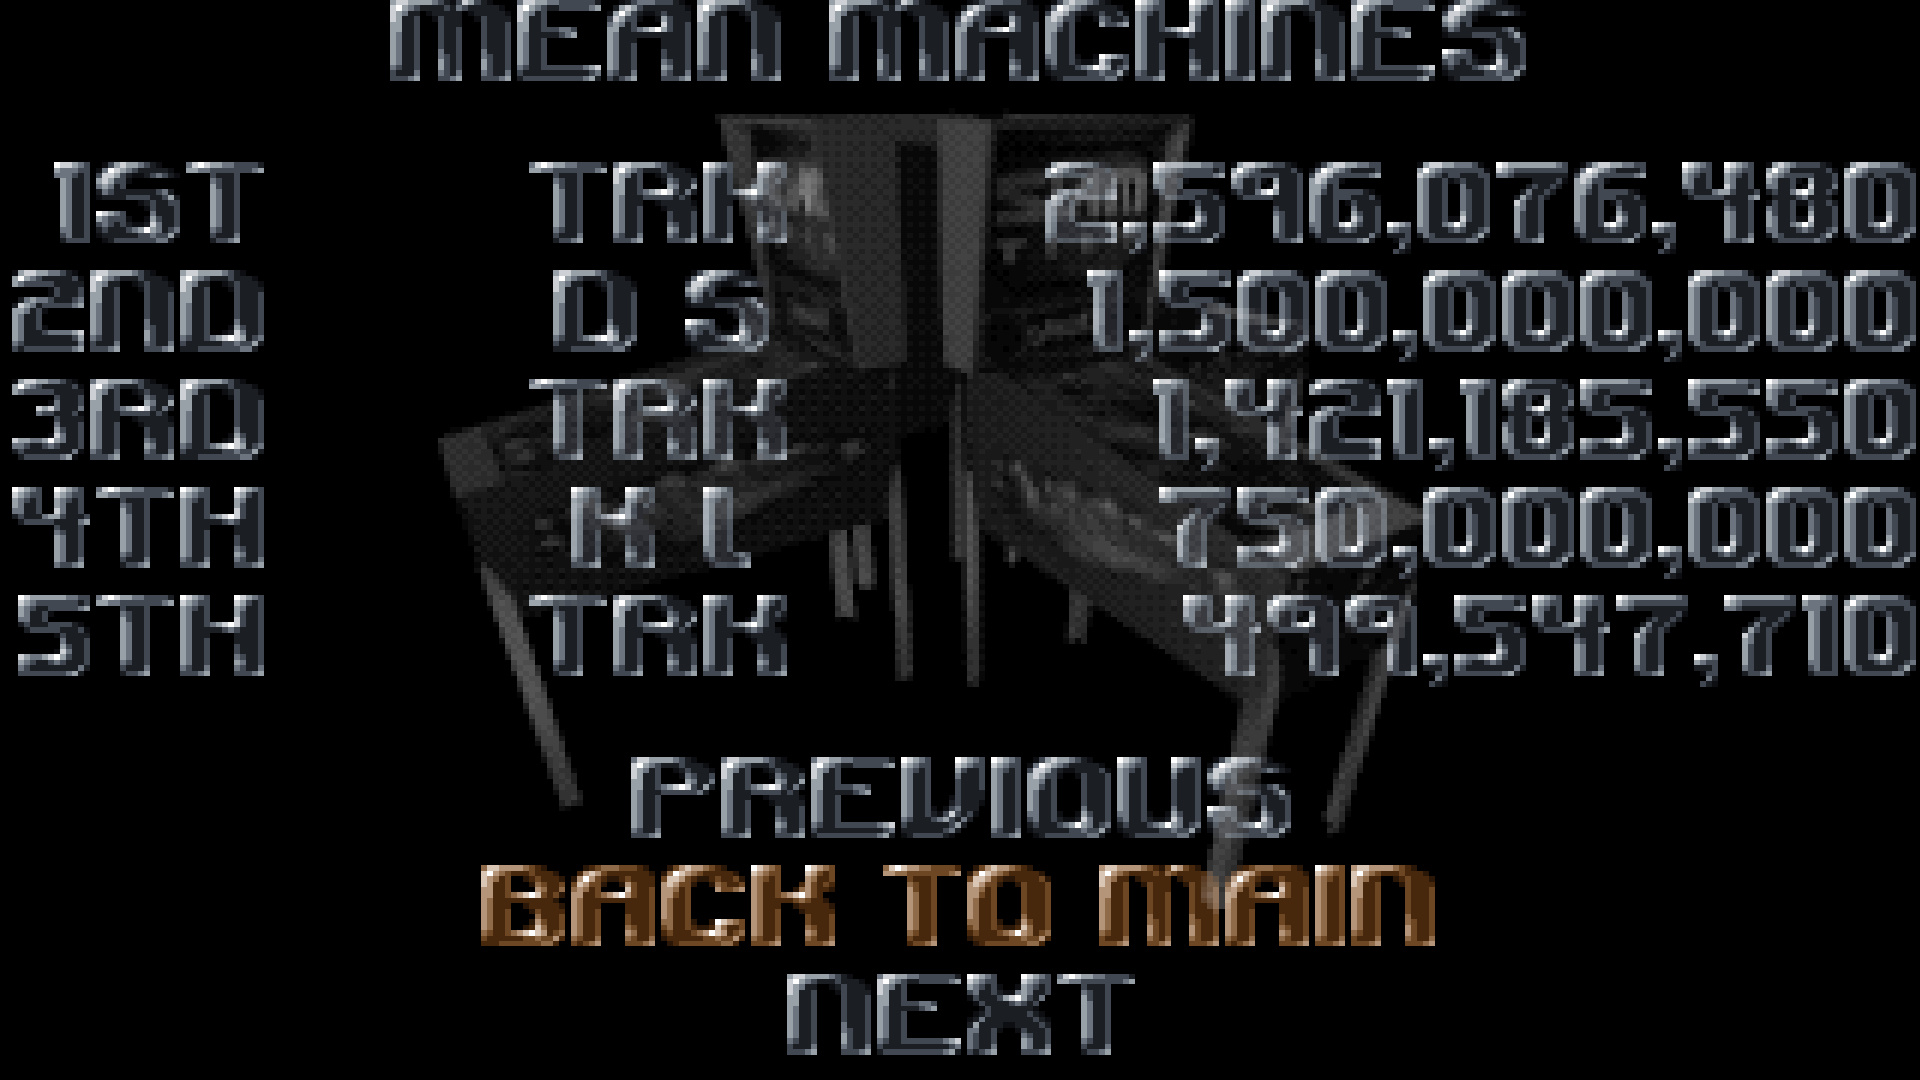 TheTrickster: Slam Tilt: Mean Machines (Amiga Emulated) 2,596,076,480 points on 2016-03-24 16:40:28